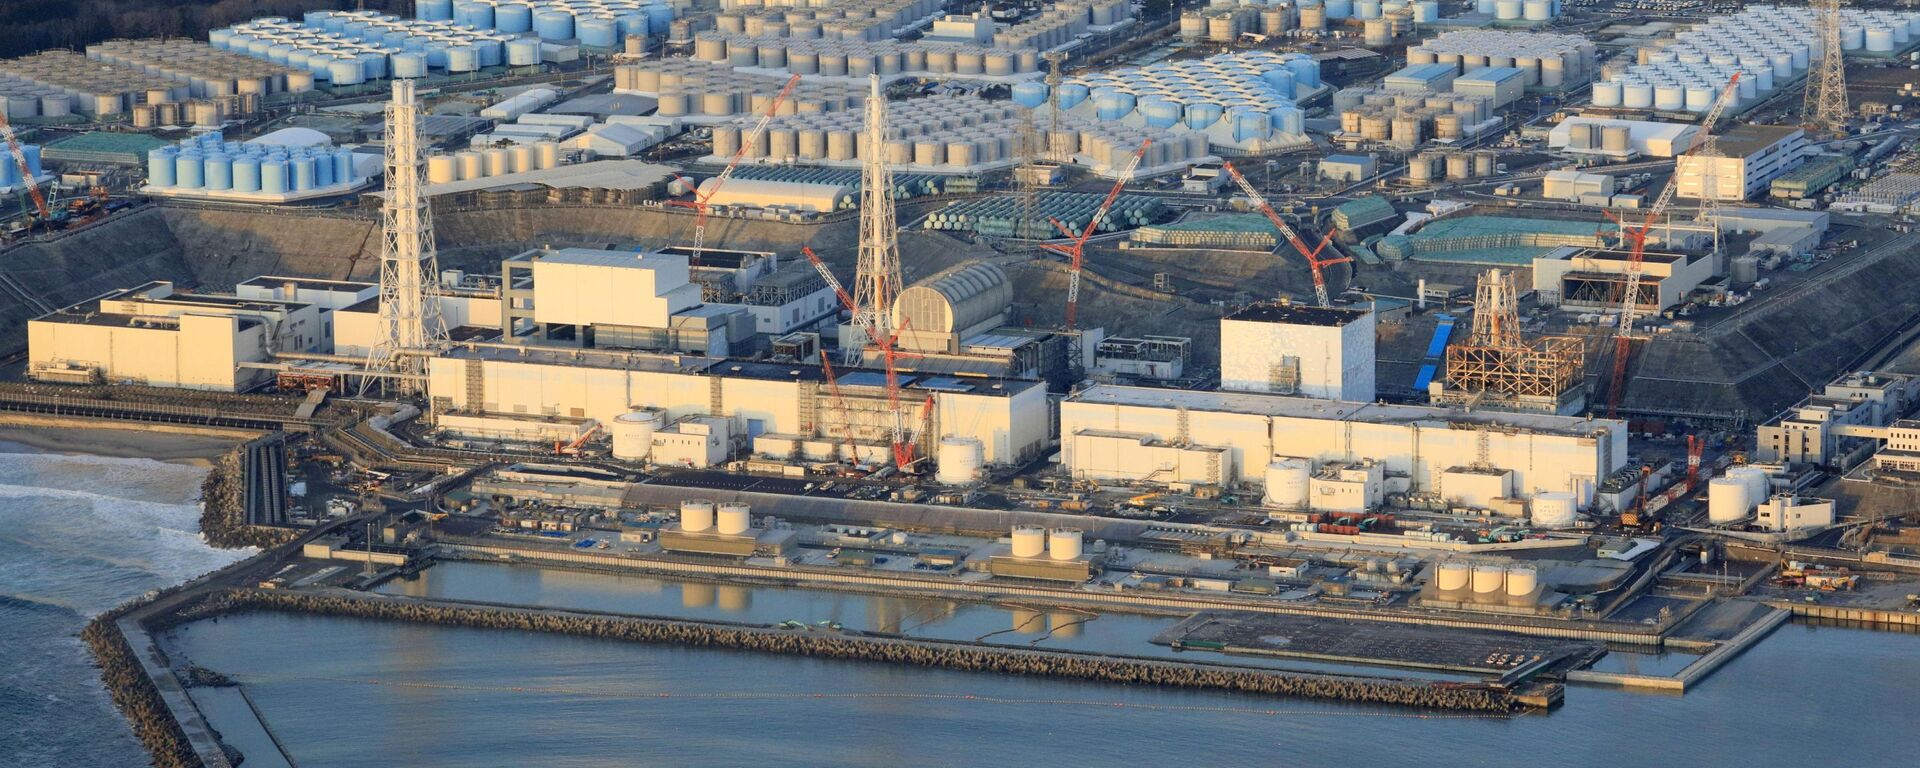 Fukushima Daiichi nuclear power plant in Okuma town - Sputnik International, 1920, 15.04.2021